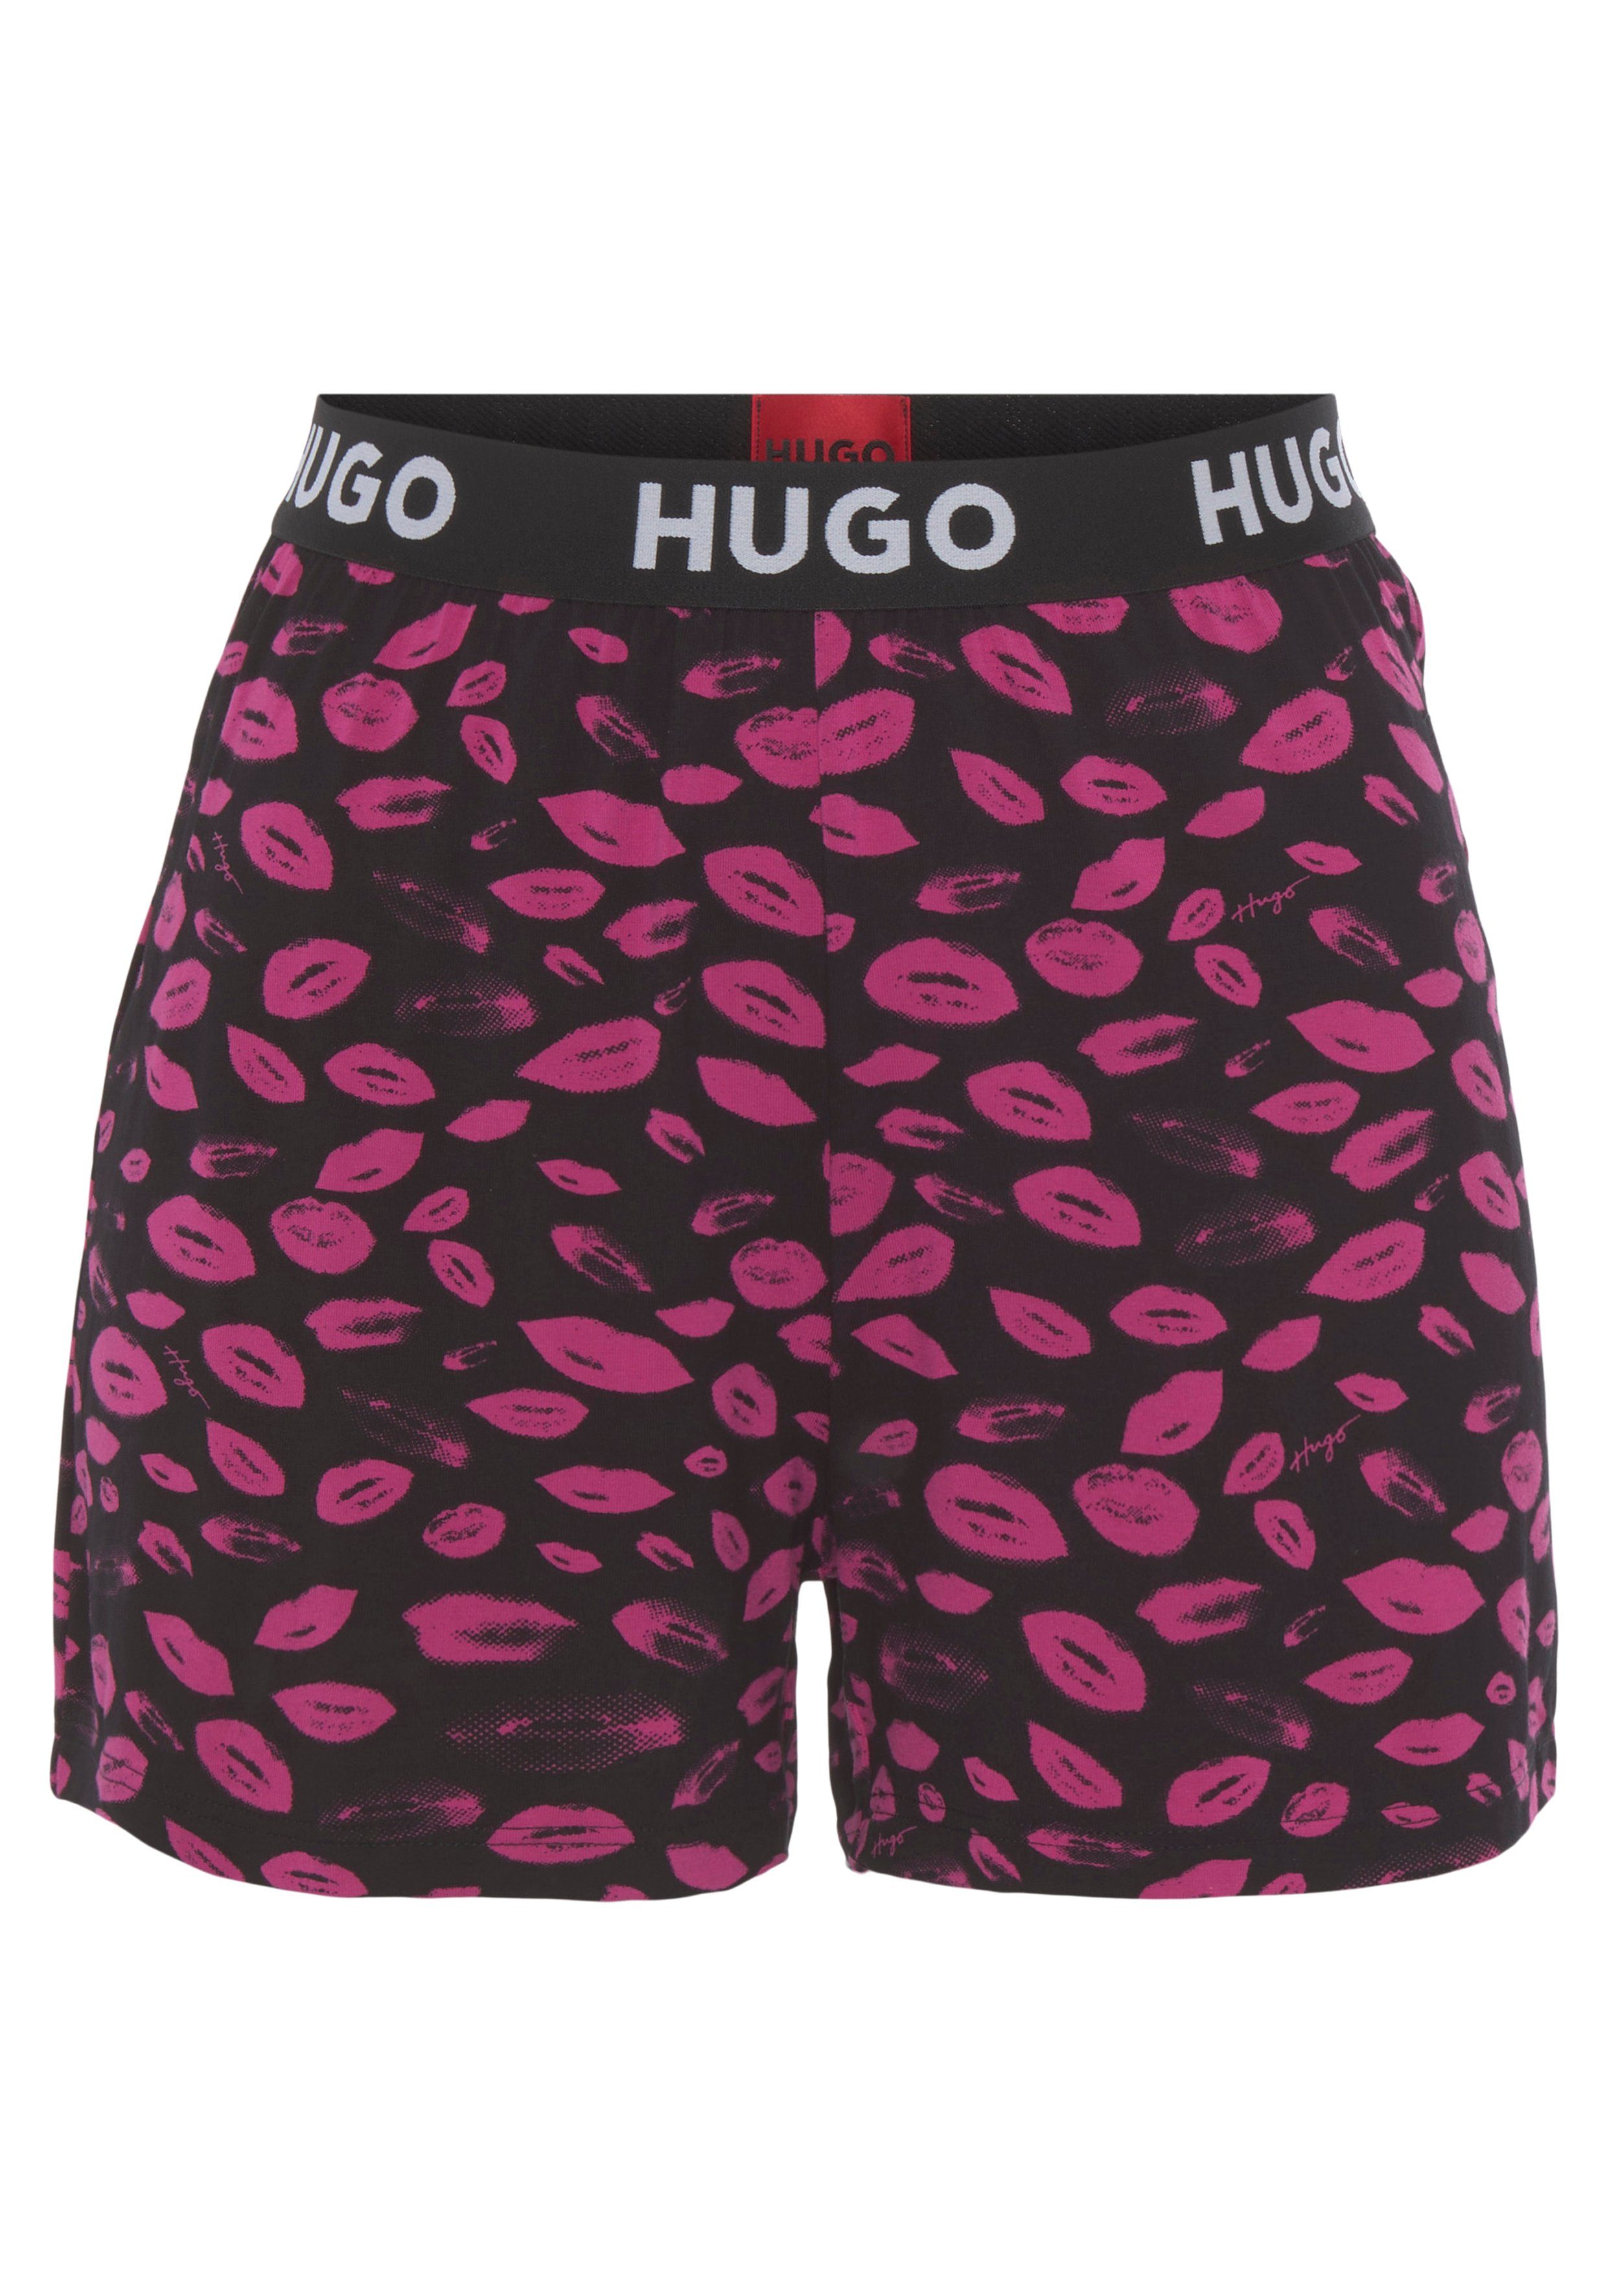 HUGO - Stretch-cotton bralette with new-season logo label